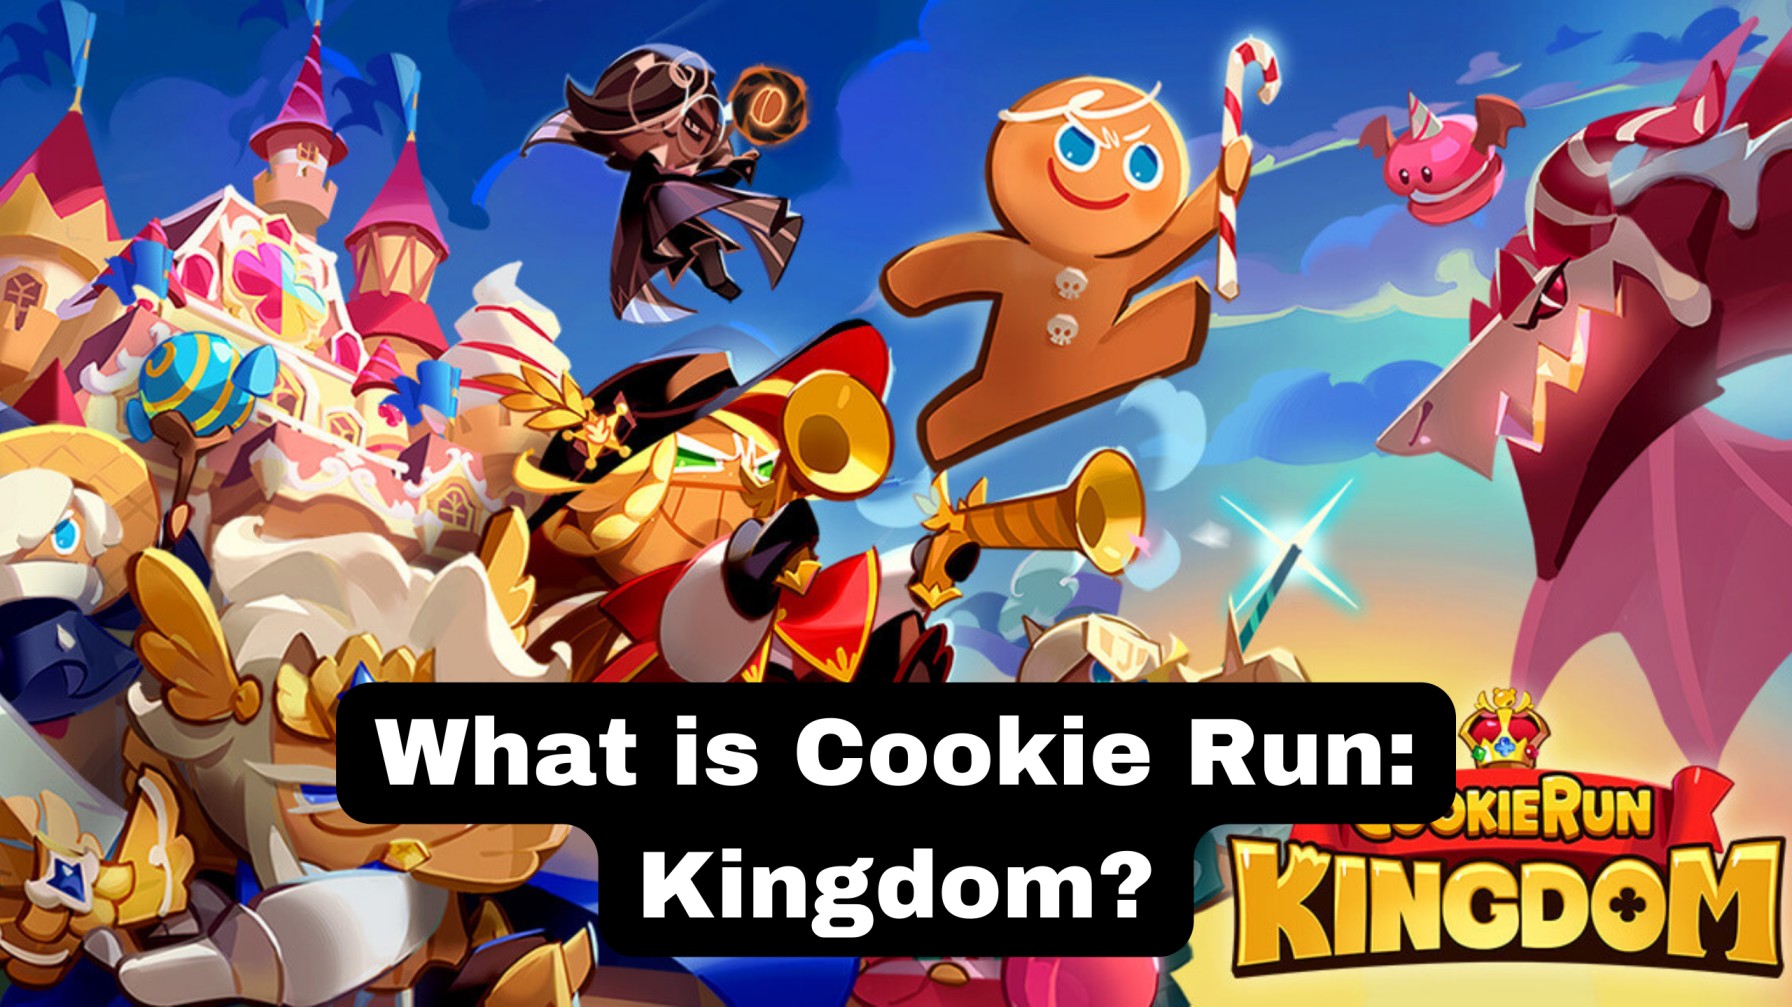 Cookie run kingdom